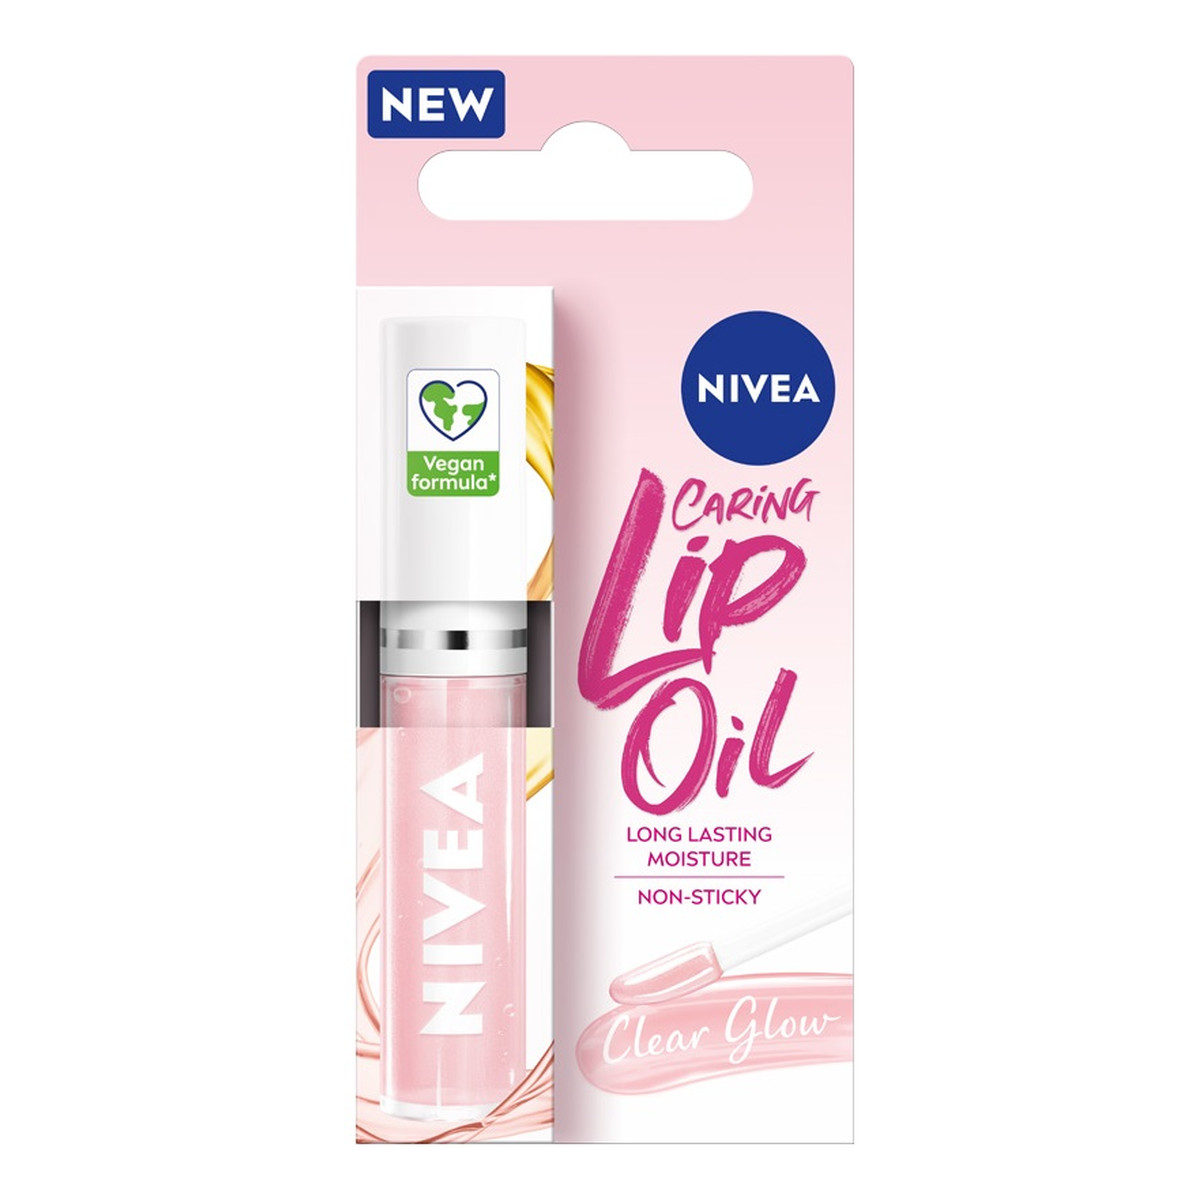 Nivea Caring Lip Oil pielęgnujący olejek do ust Clear Glow 5ml